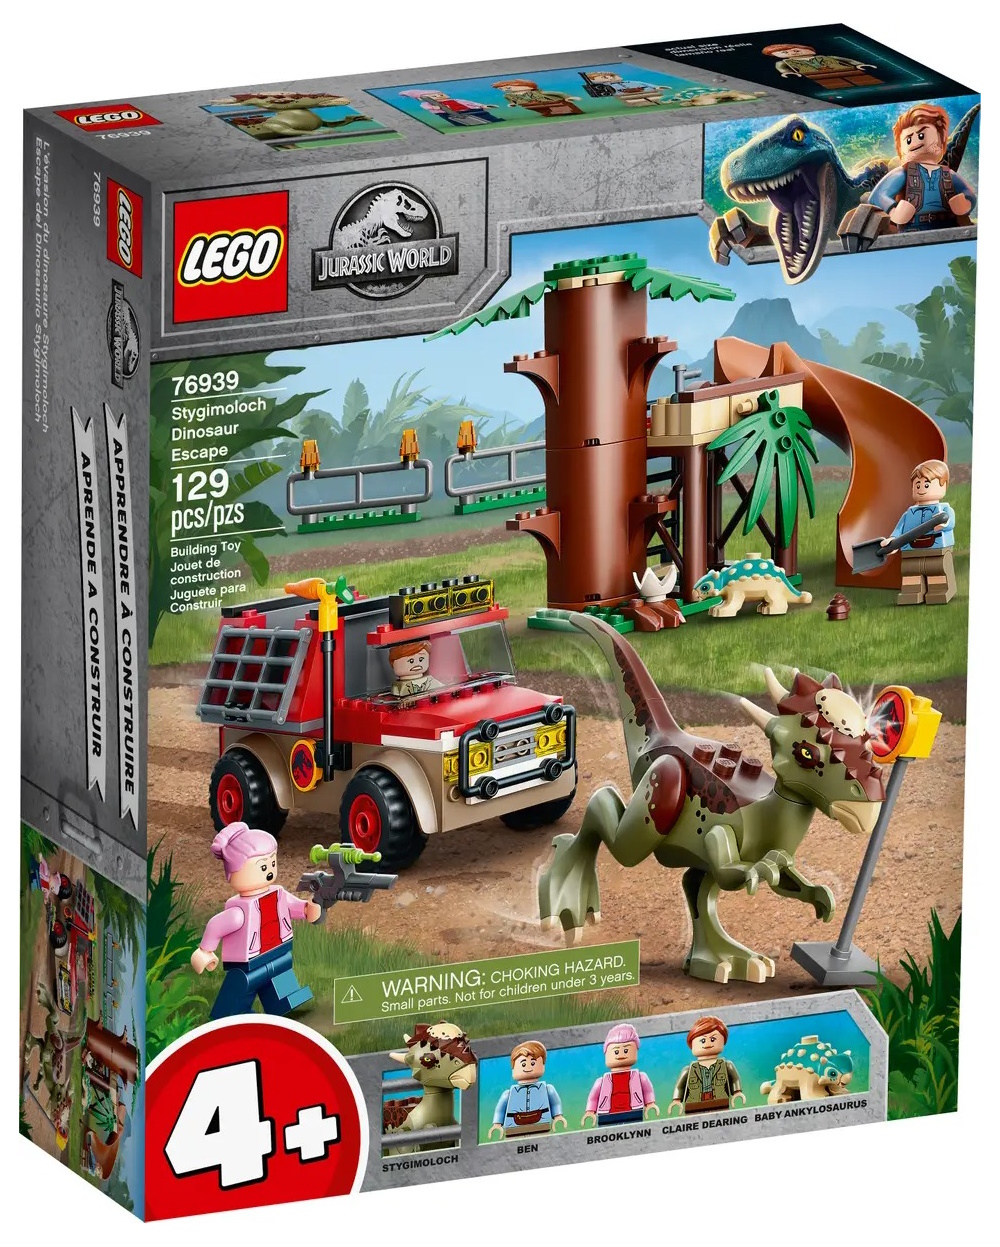 Конструктор LEGO Jurassic World Побег стигимолоха 76939 конструктор lego jurassic world побег стигимолоха 76939